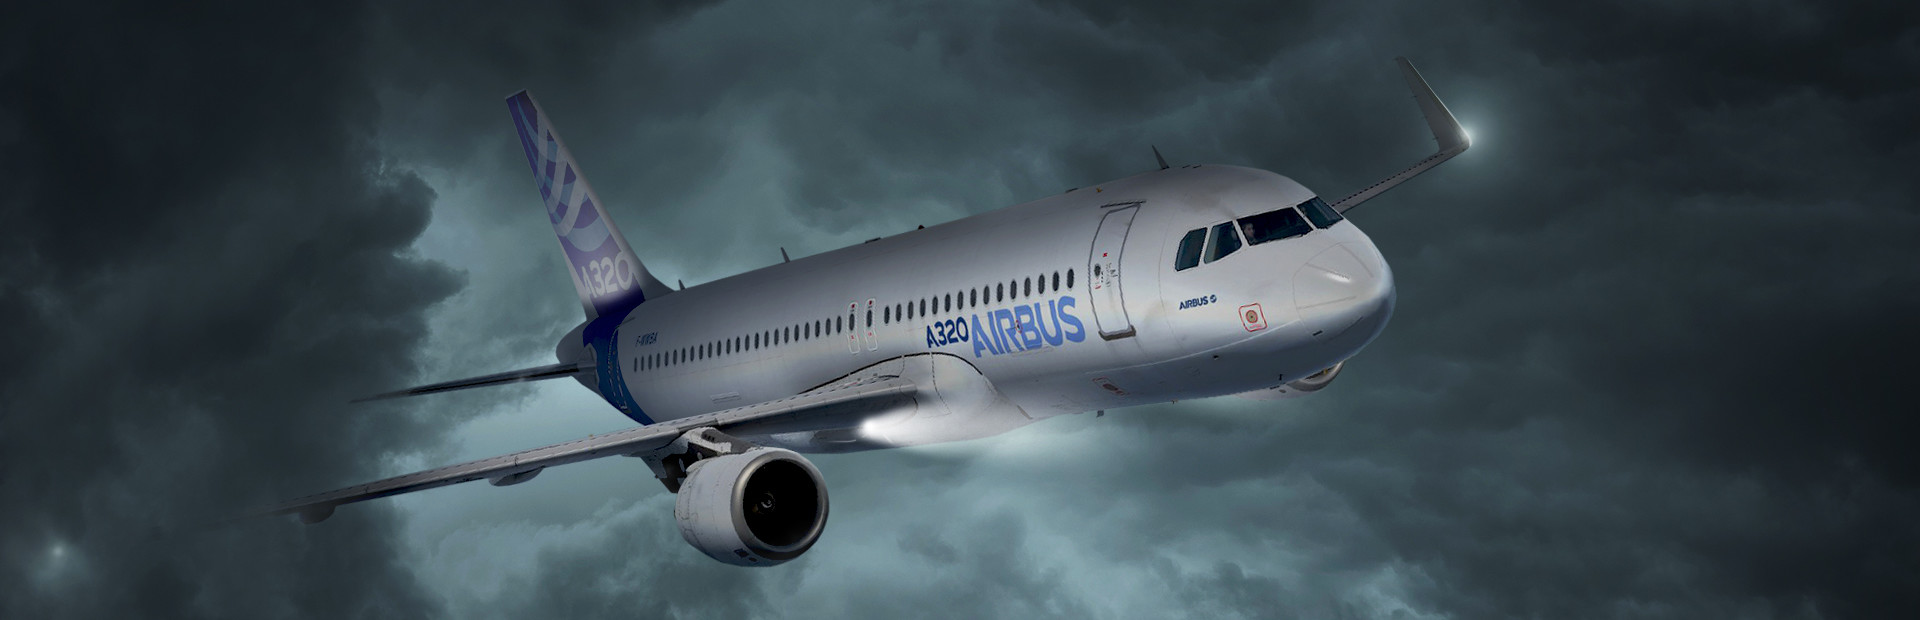 Microsoft Flight Simulator X: Steam Edition cover image